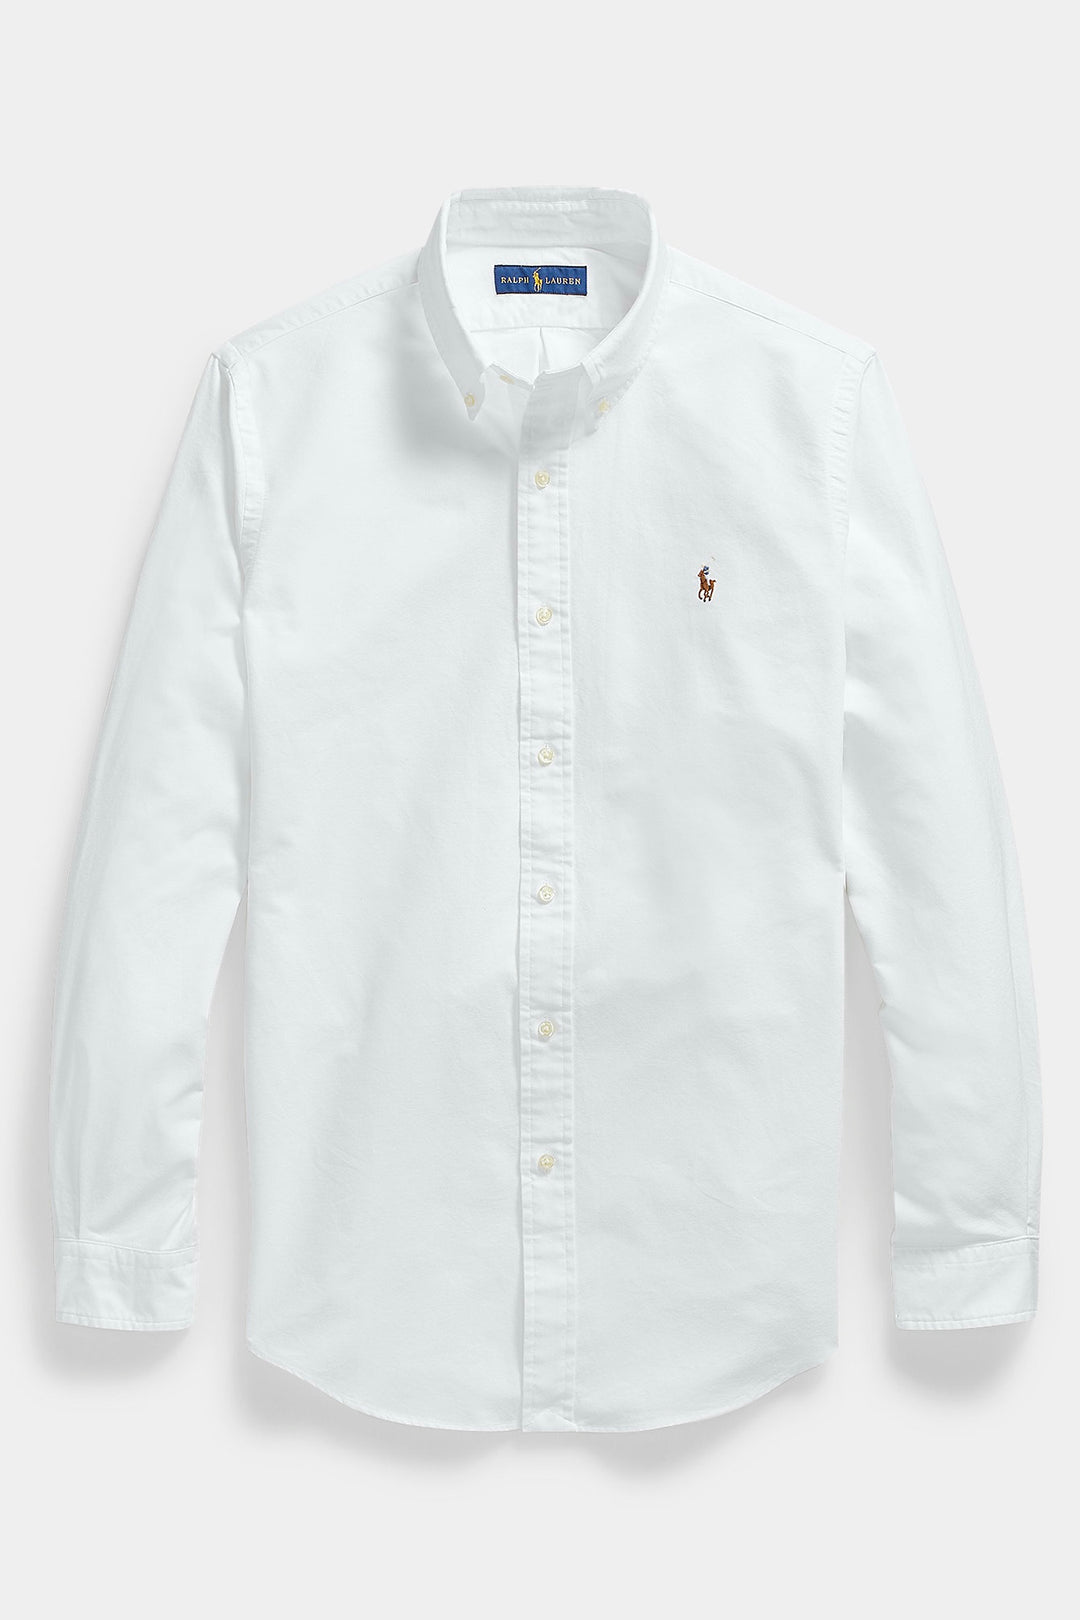 POLO RALPH LAUREN - Custom Fit Oxford Shirt White - Dale